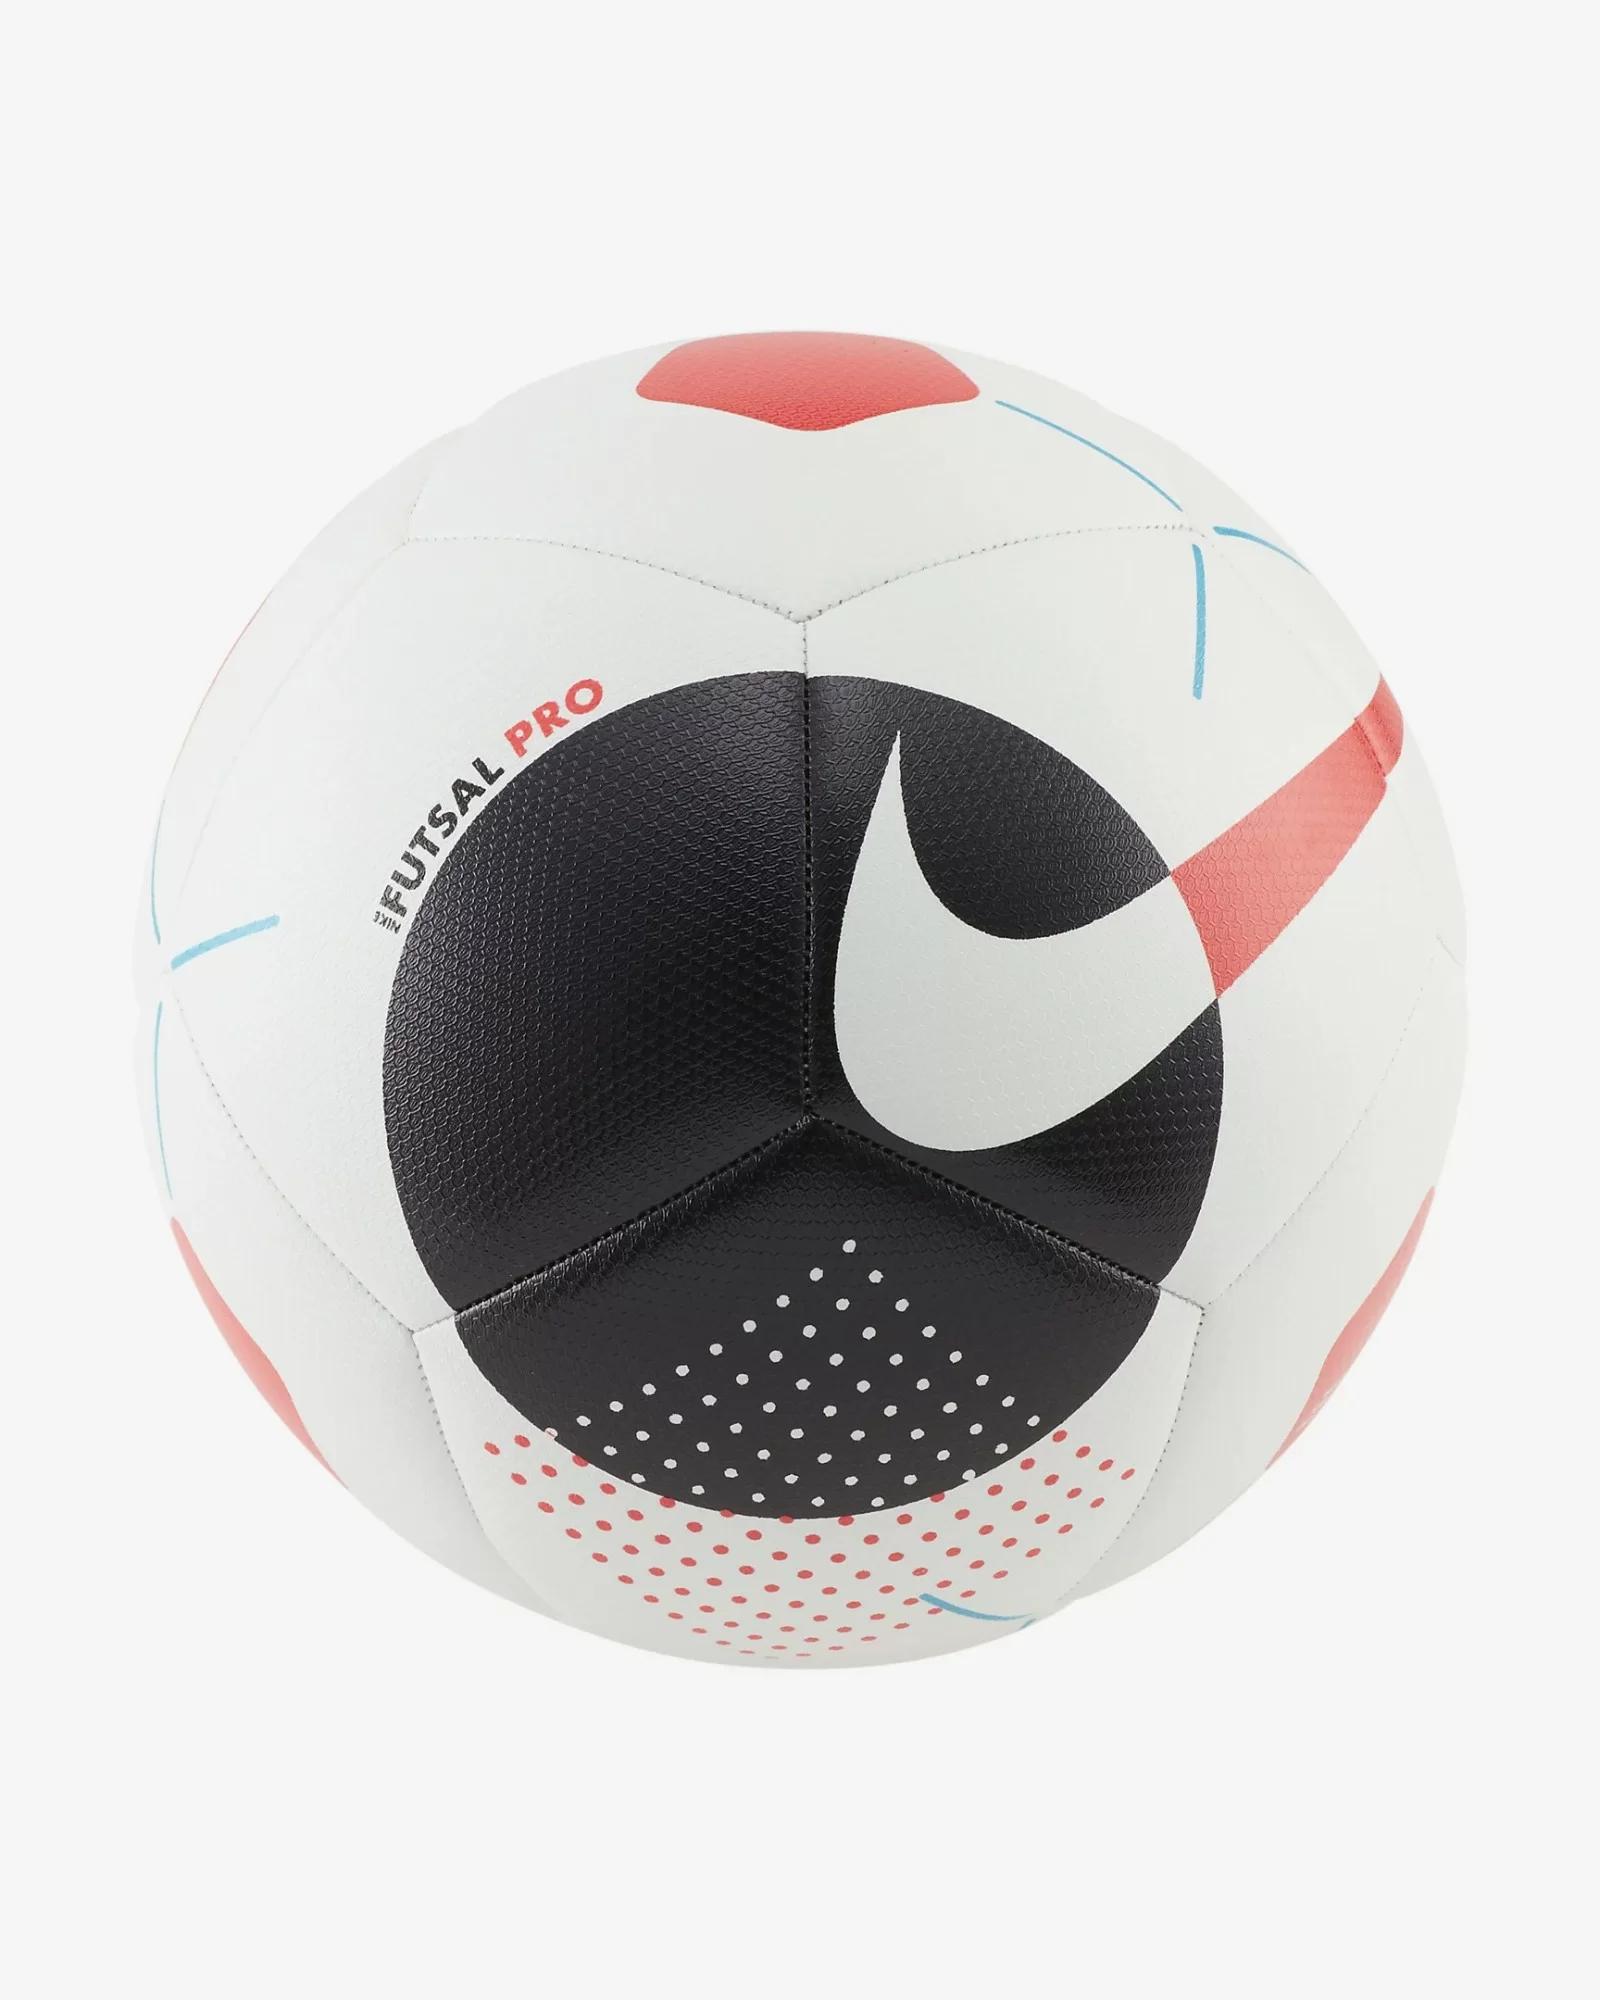 Фото Мяч футзальный Nike Pro №4 12пан, мат. ТПУ FIFA PR SC3971-102 со склада магазина СпортСЕ